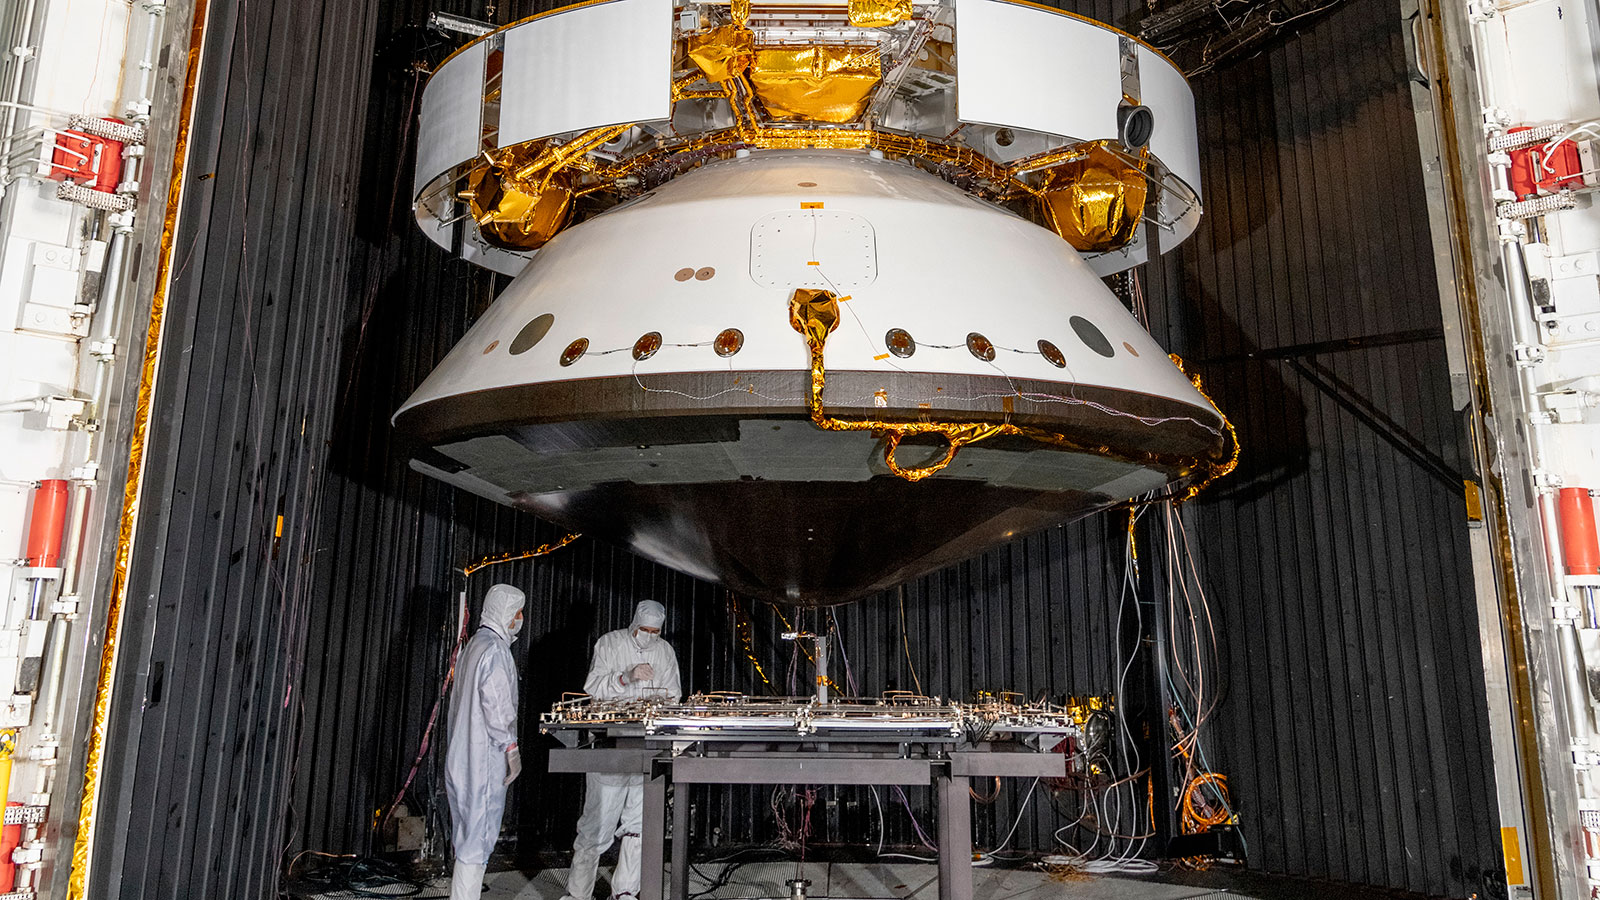 Engineers prepare the Mars 2020 spacecraft for a thermal vacuum (TVAC) test